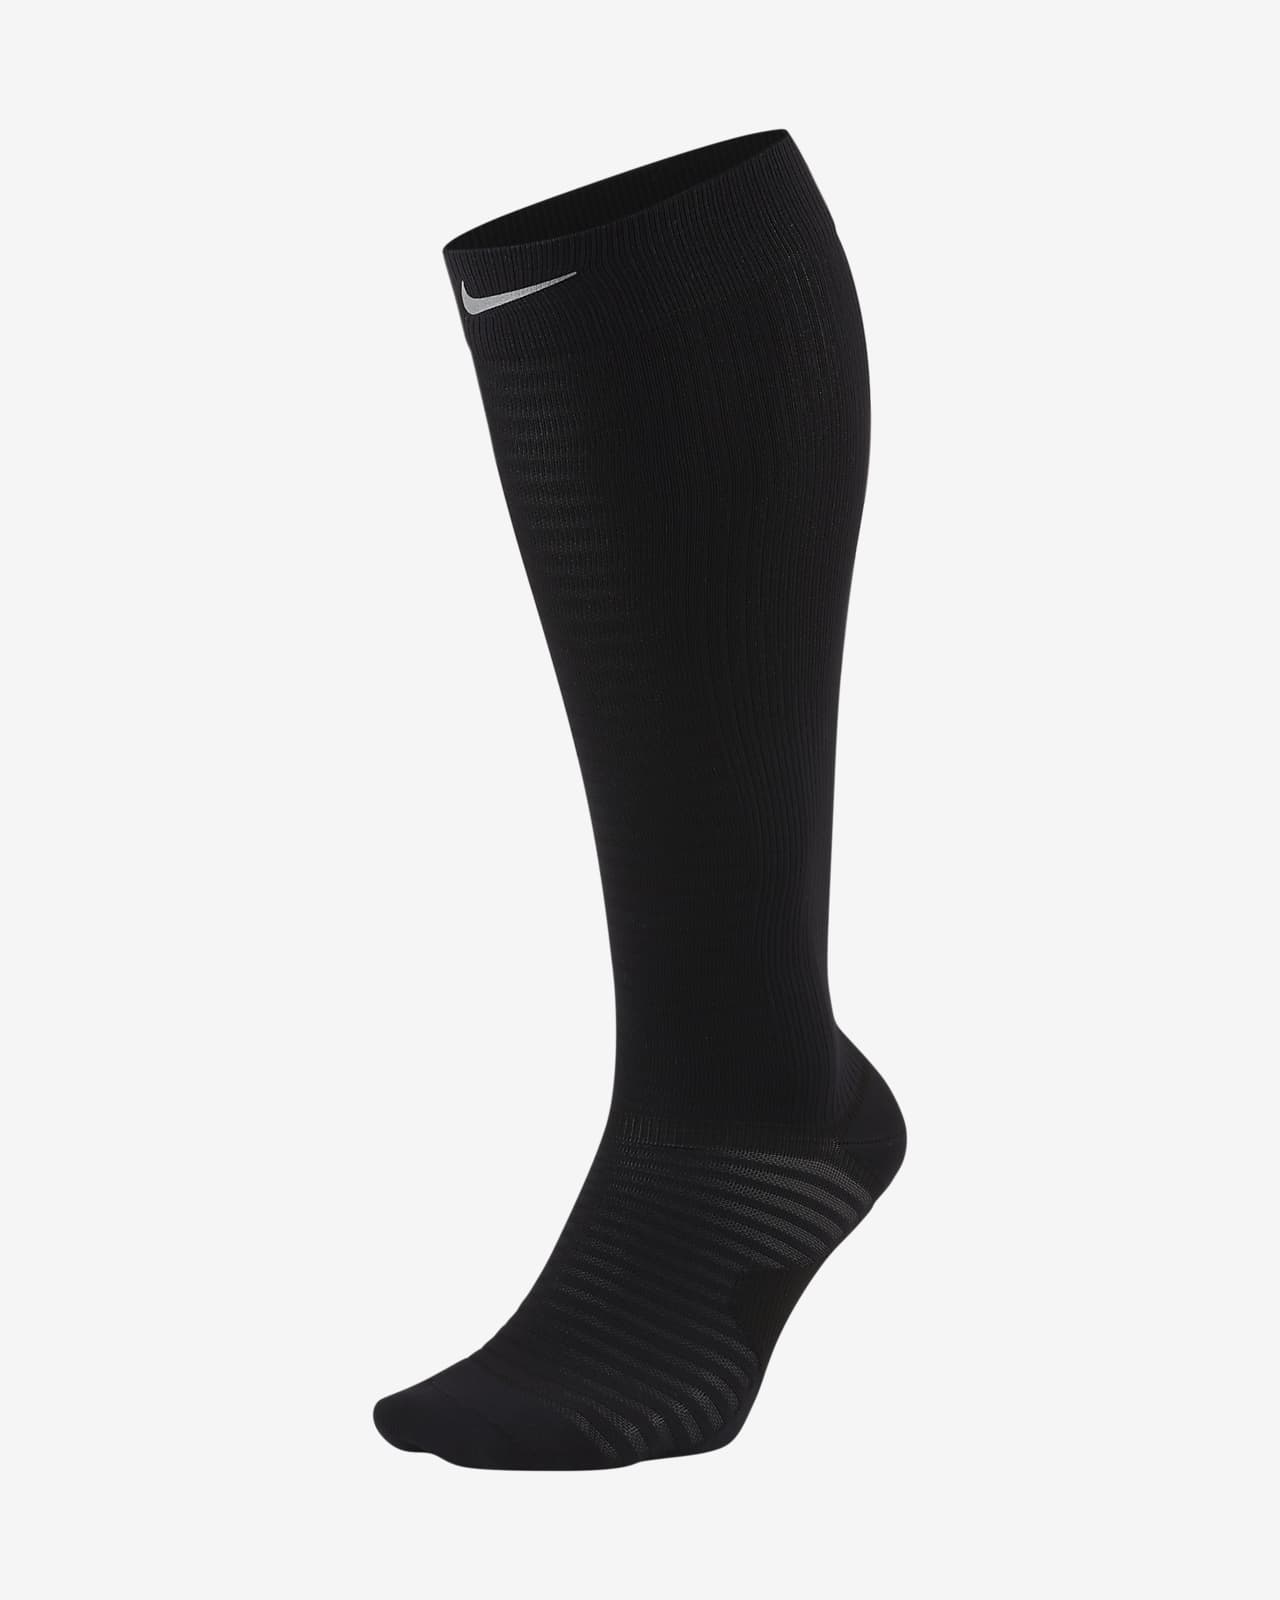 nike compression socks